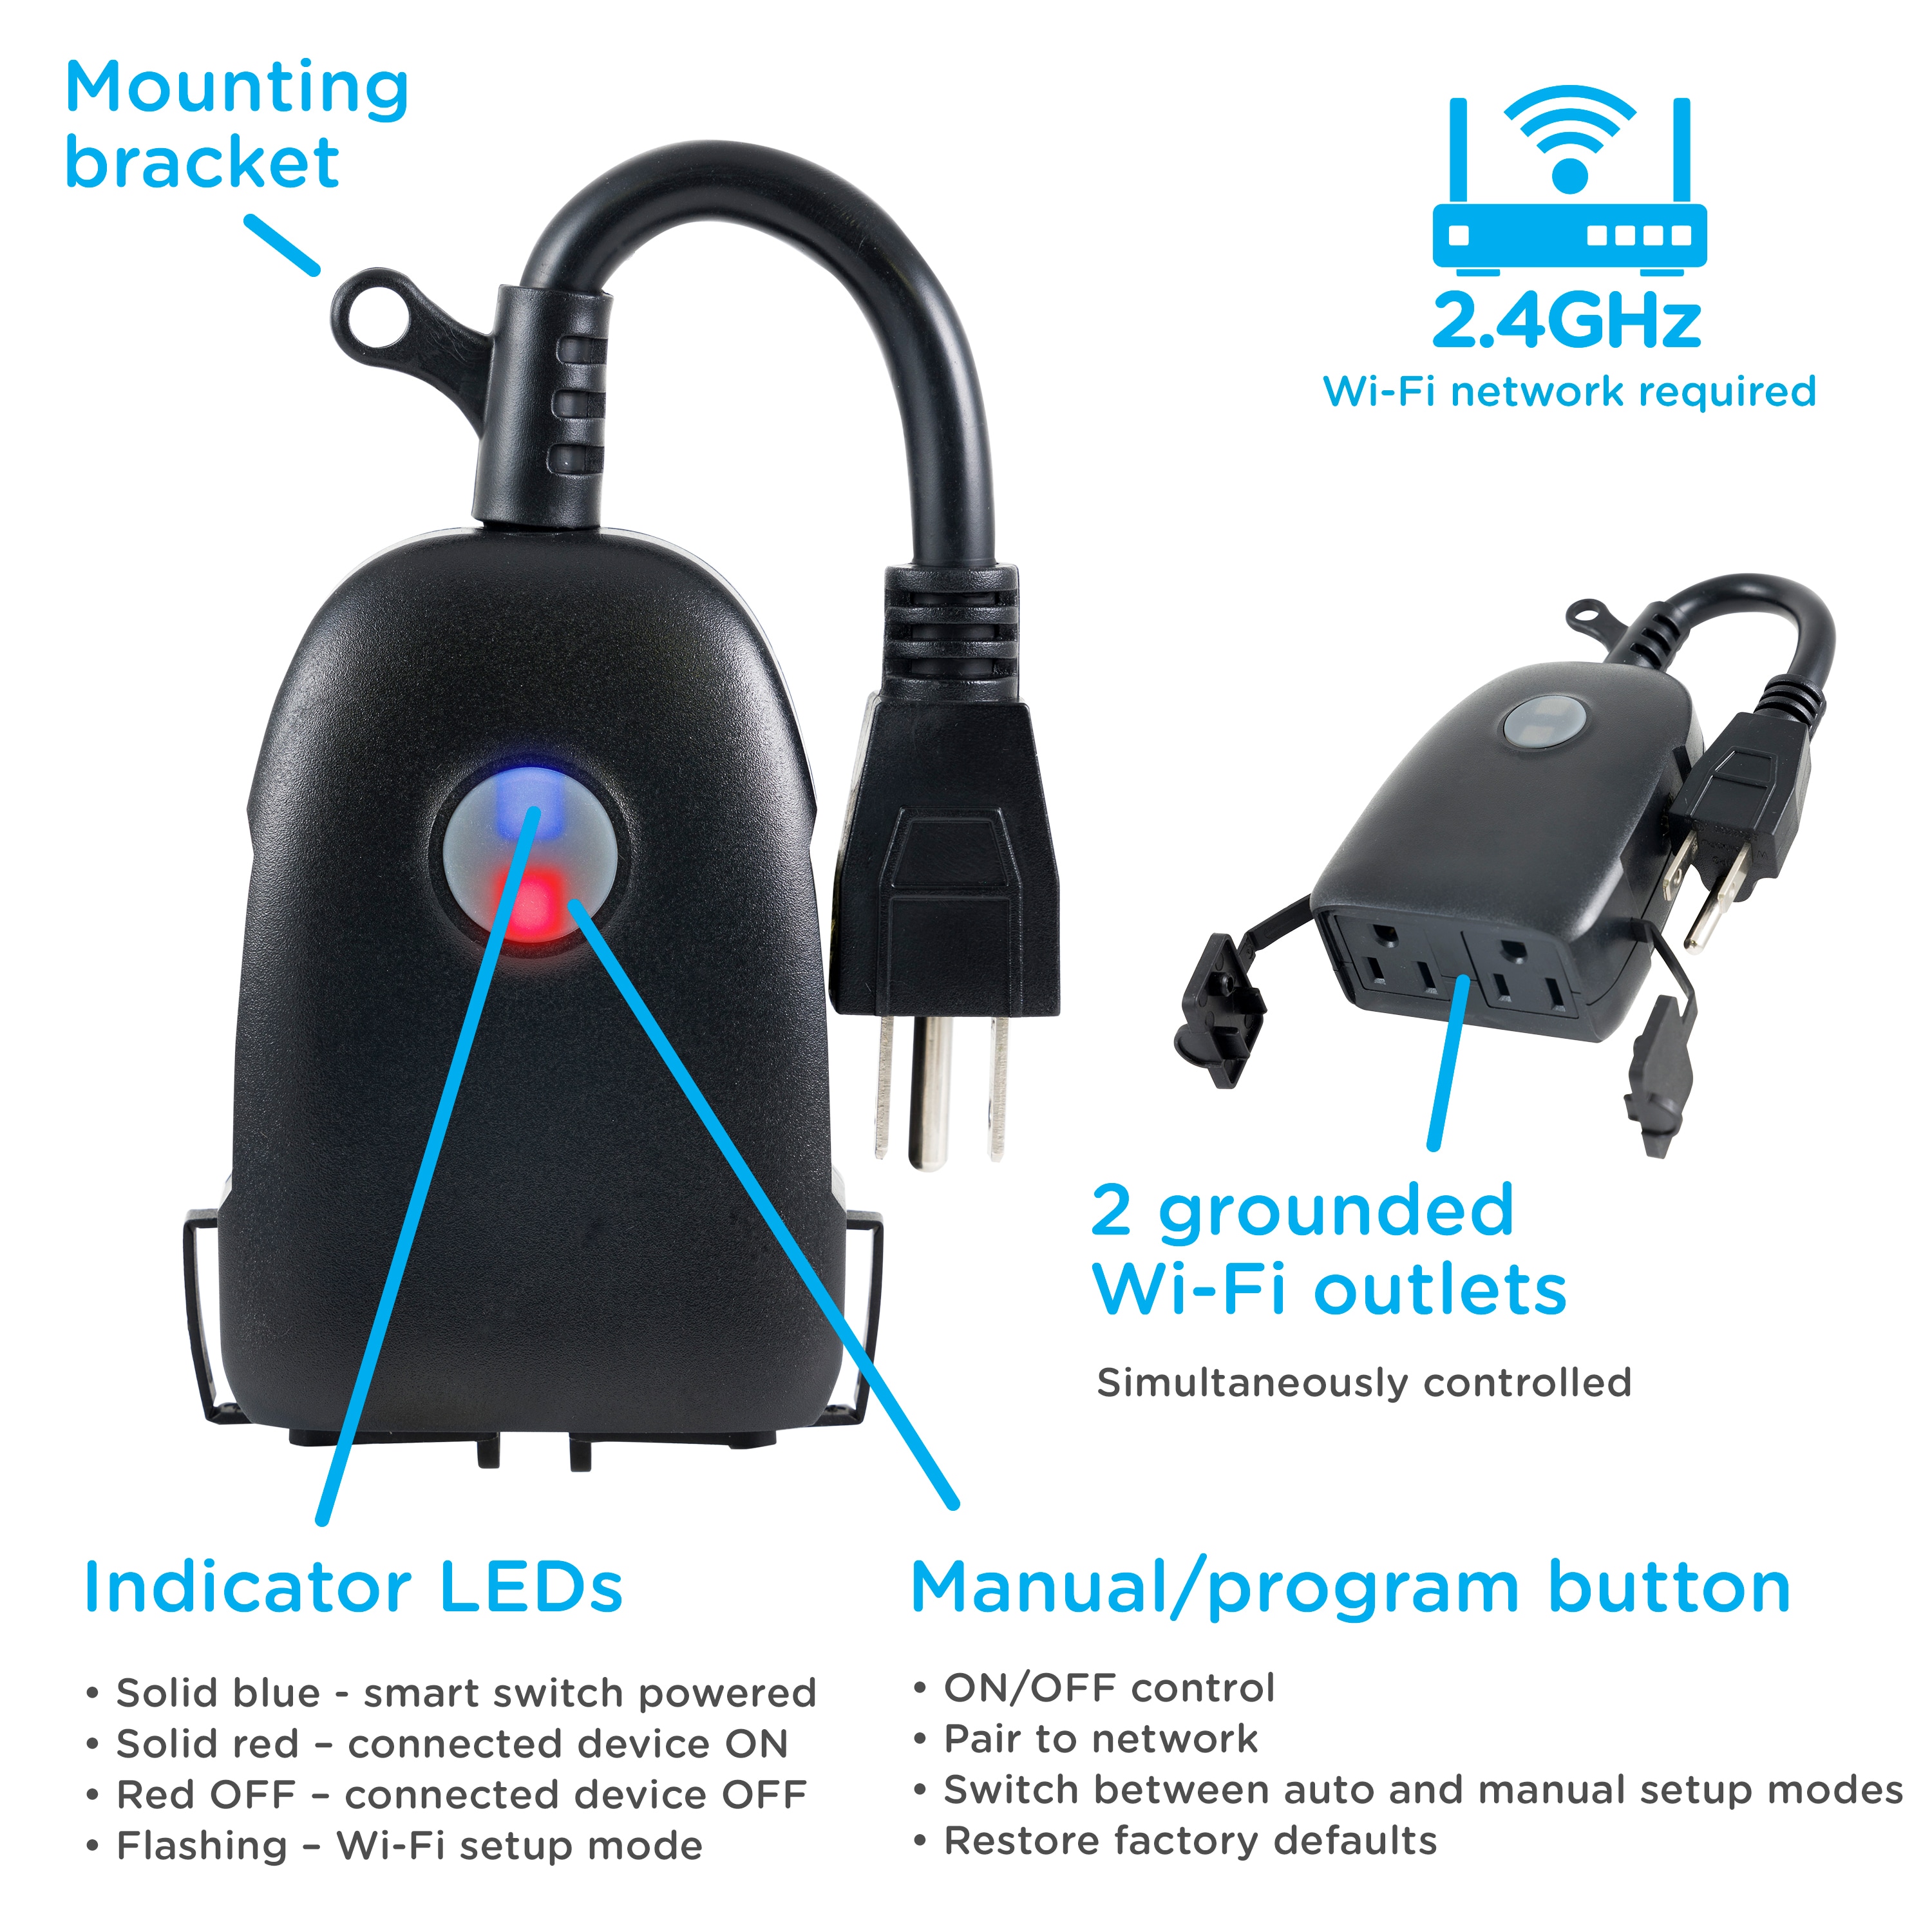 Leonlite WiFi Outdoor Smart Plug - 250v